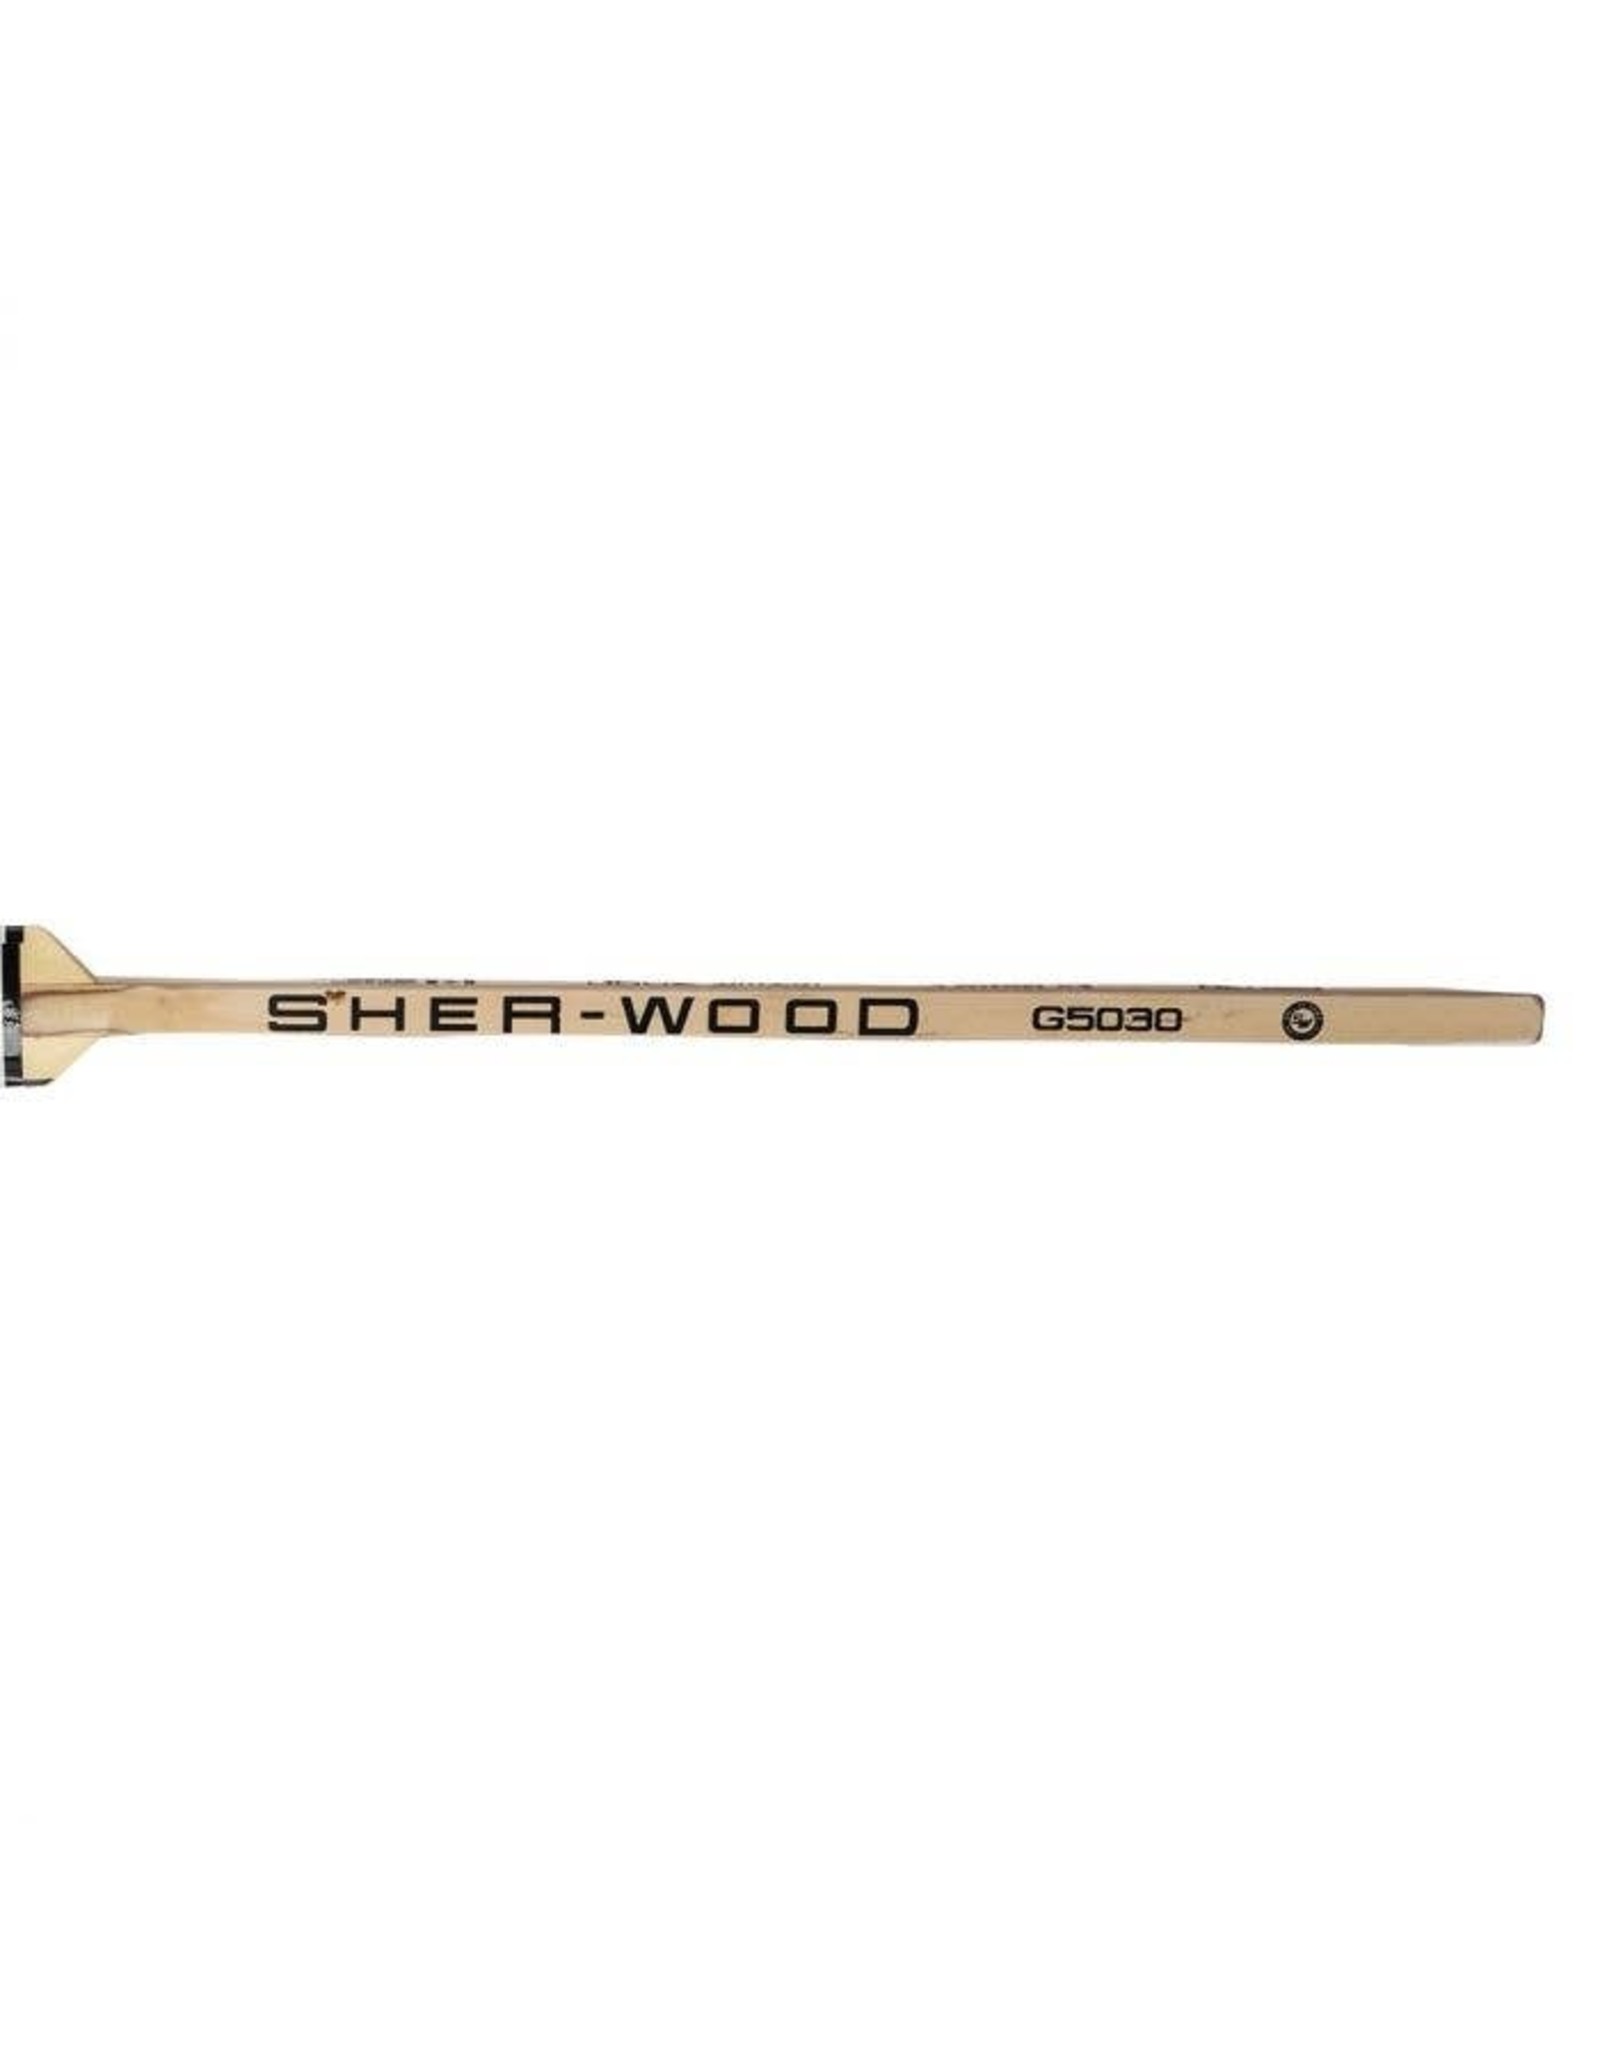 SHER-WOOD G5030, Intermediate, Goalie Stick